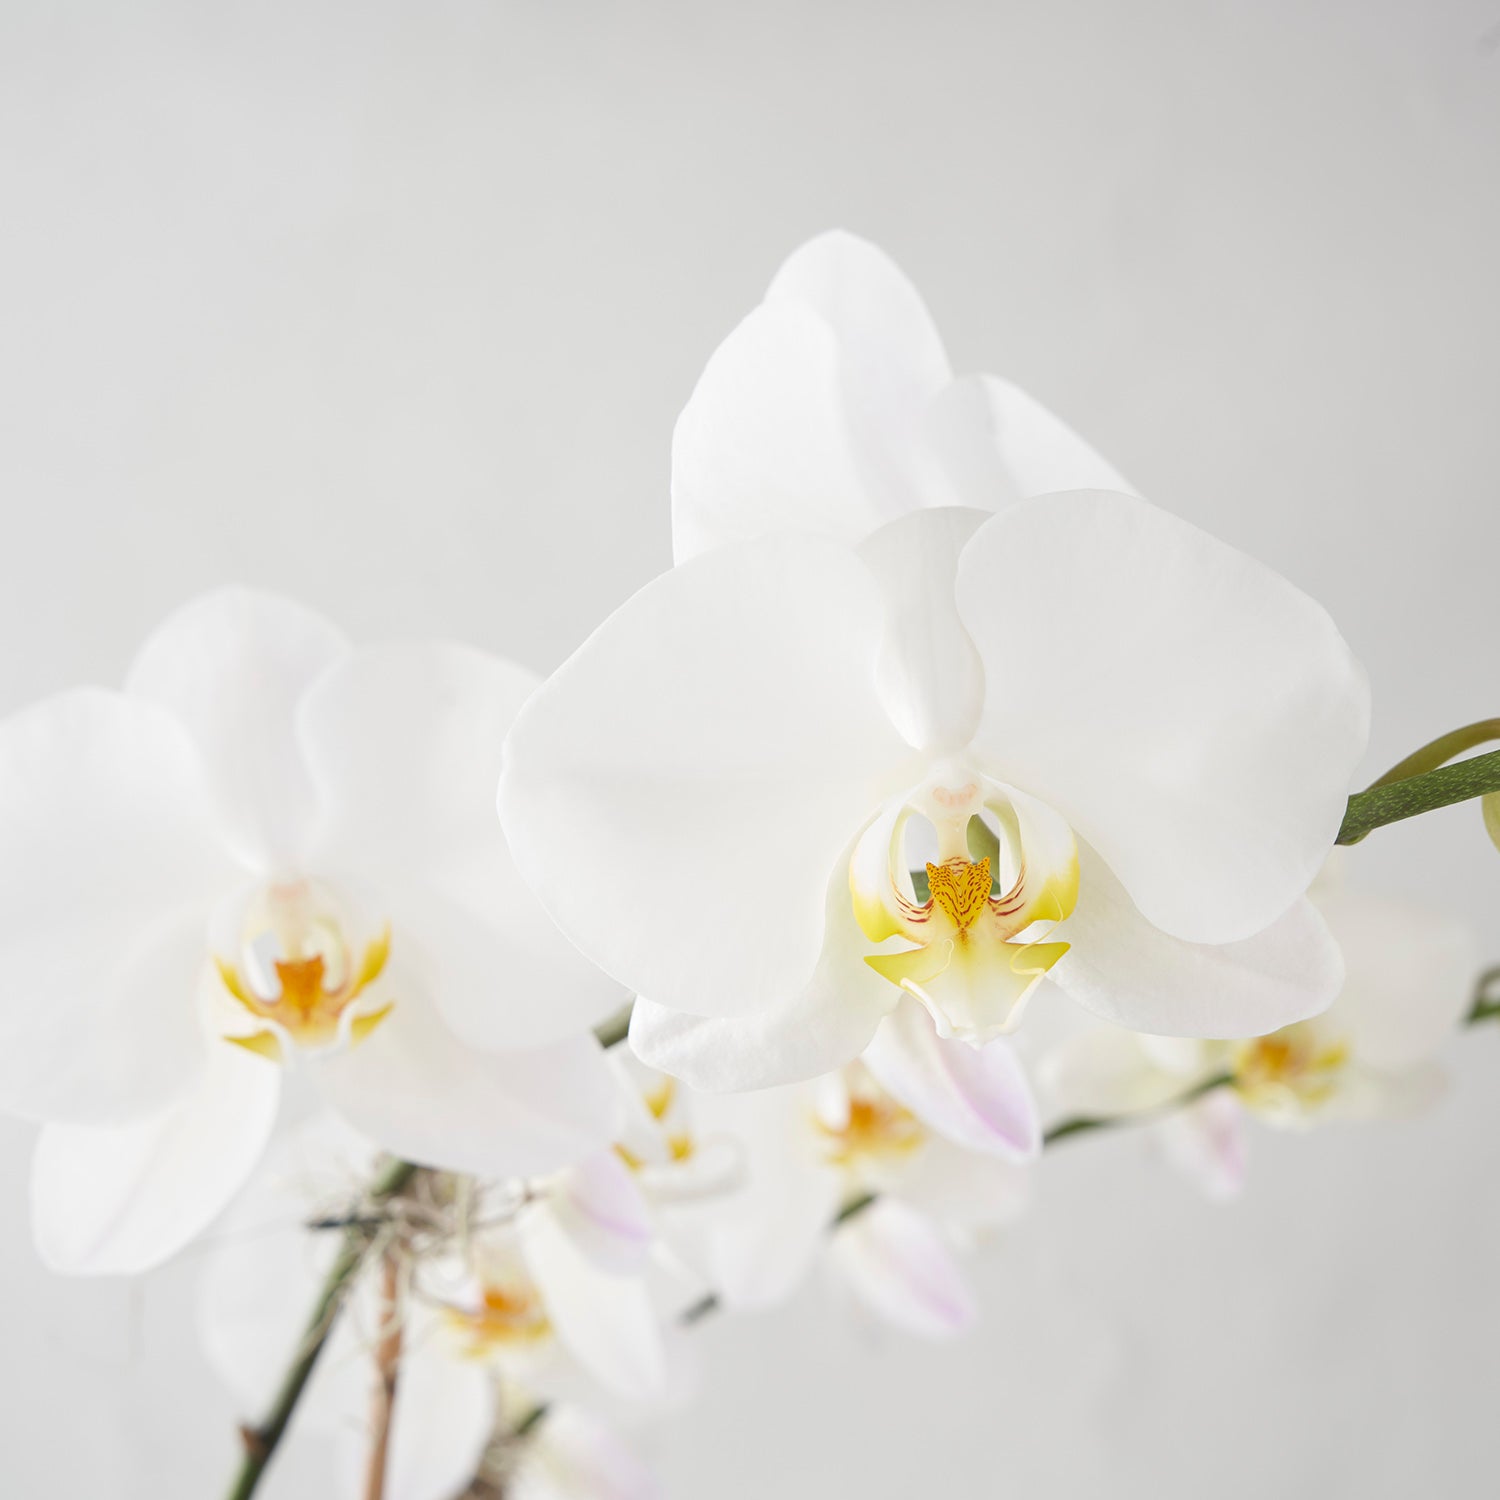 Offcenter closeup of white phalaenopsis flowers on white background. 